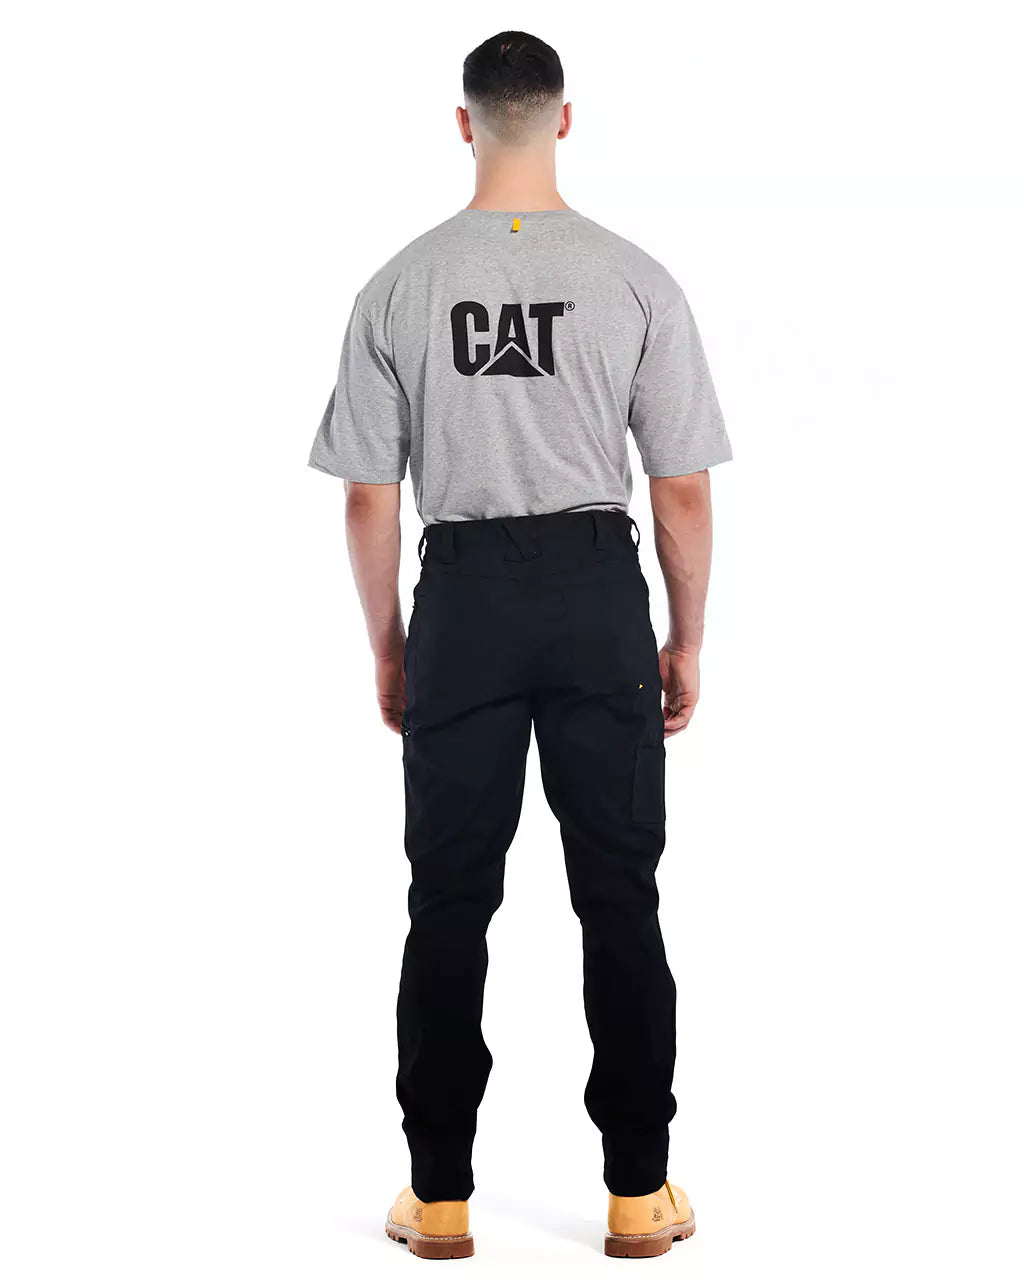 CAT Caterpillar Fleece Lined Black Canvas Work Pants Men's 36 x 30  Insulated